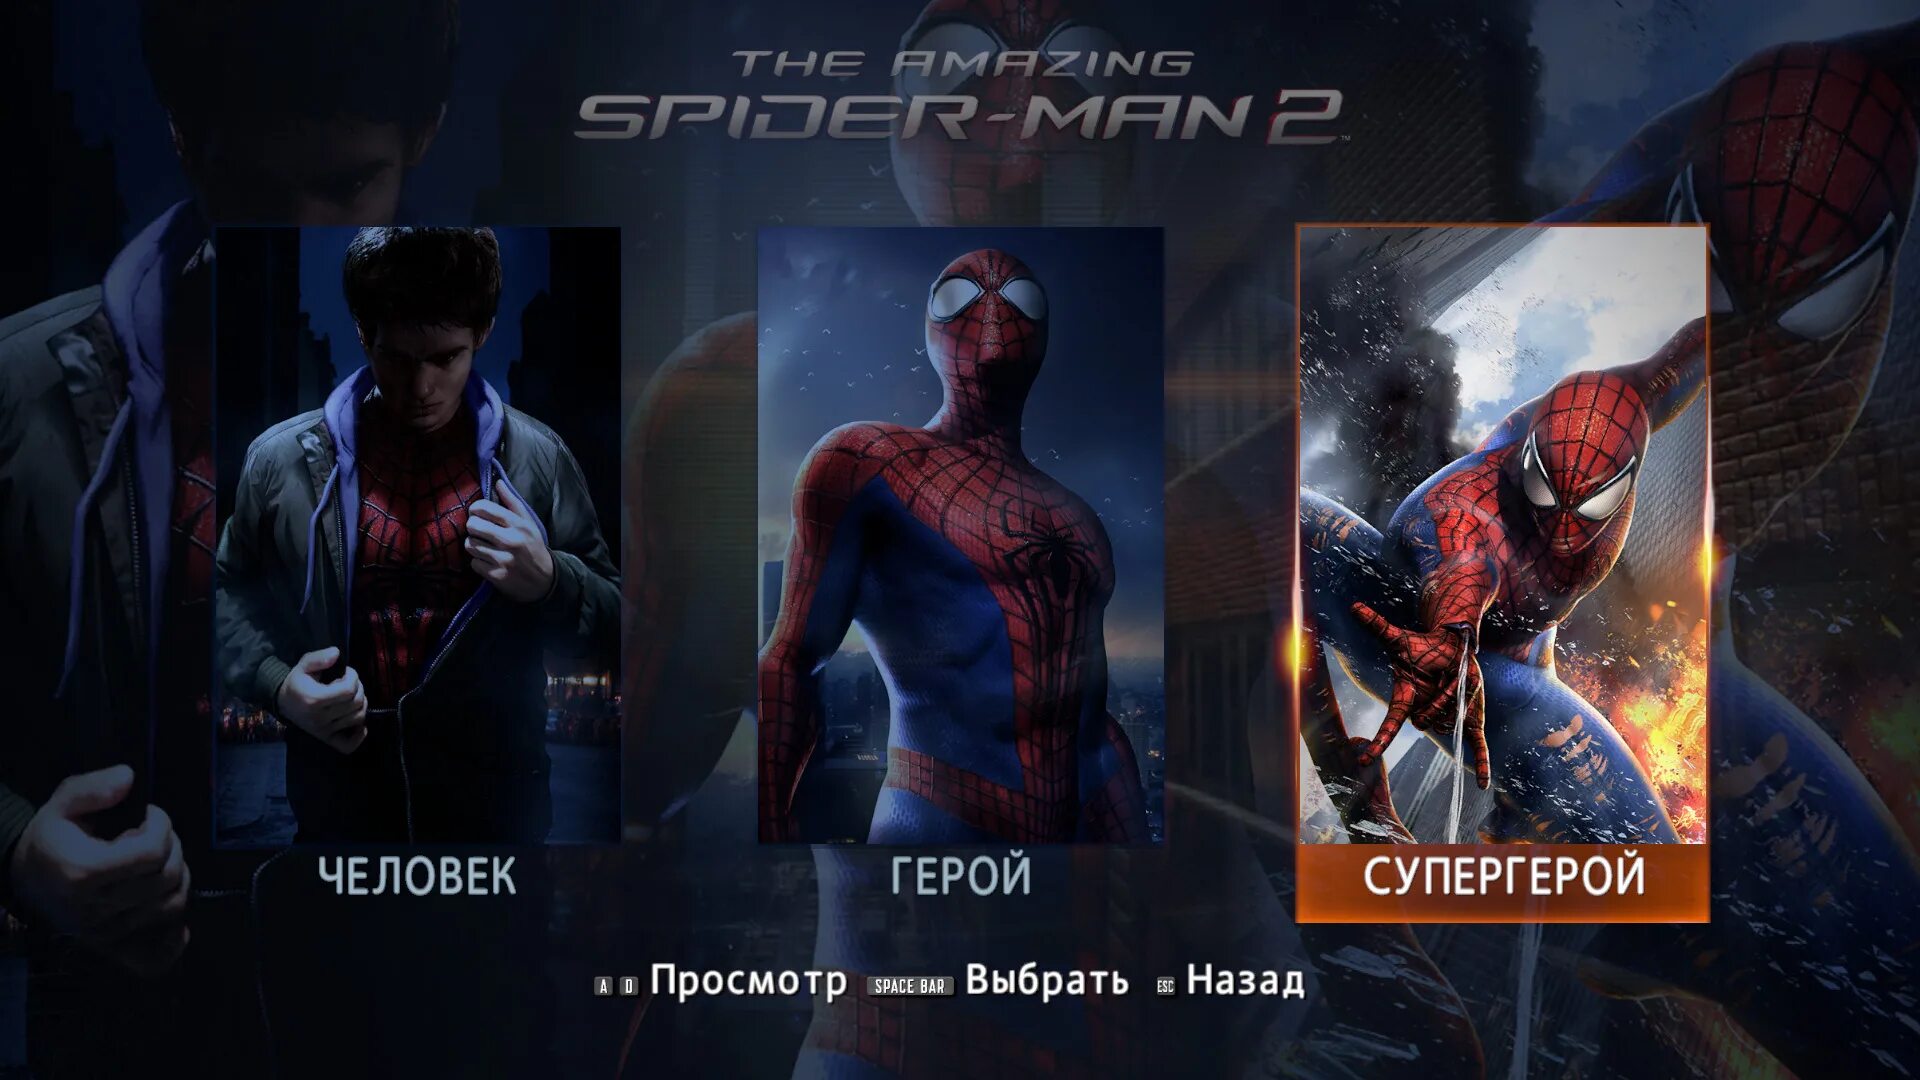 Spider man 2014 игра. Новый человек 2 игра. Новый человек паук 2 игра на ПК. The amazing Spider-man 2 2014 game. Новый человек-паук высокое напряжение игра.